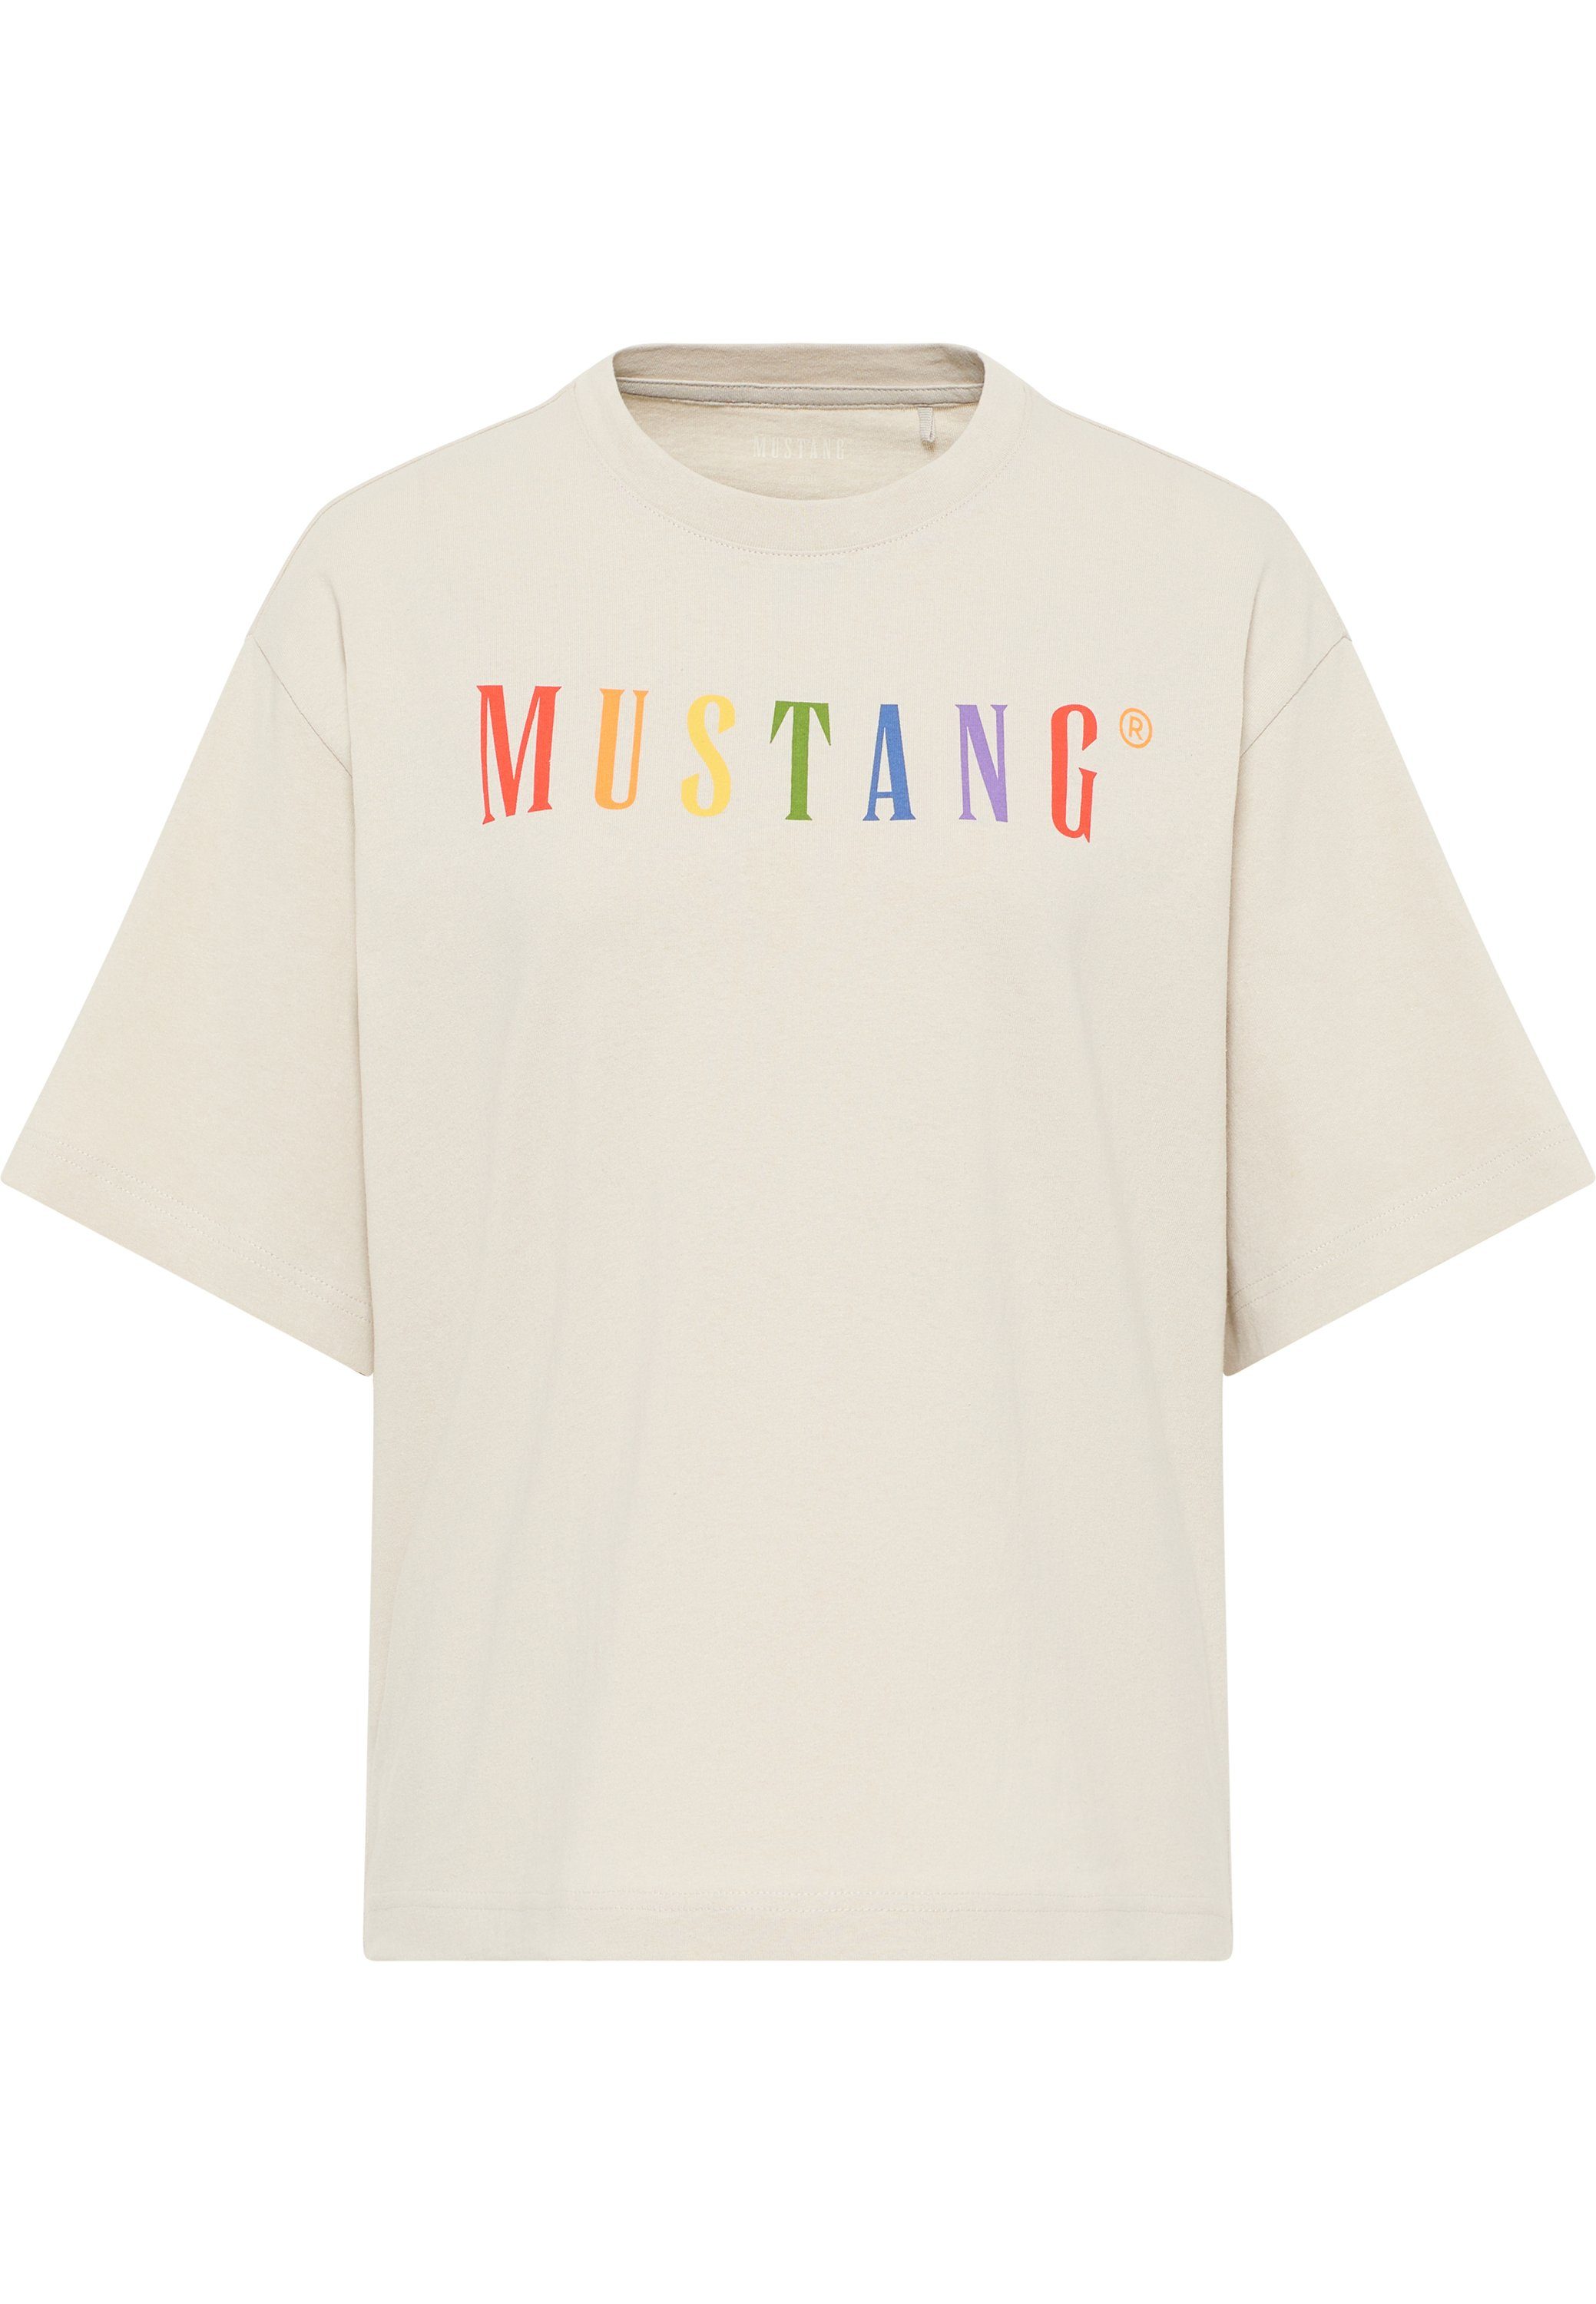 MUSTANG Kurzarmshirt T-Shirt, Farbiger Print